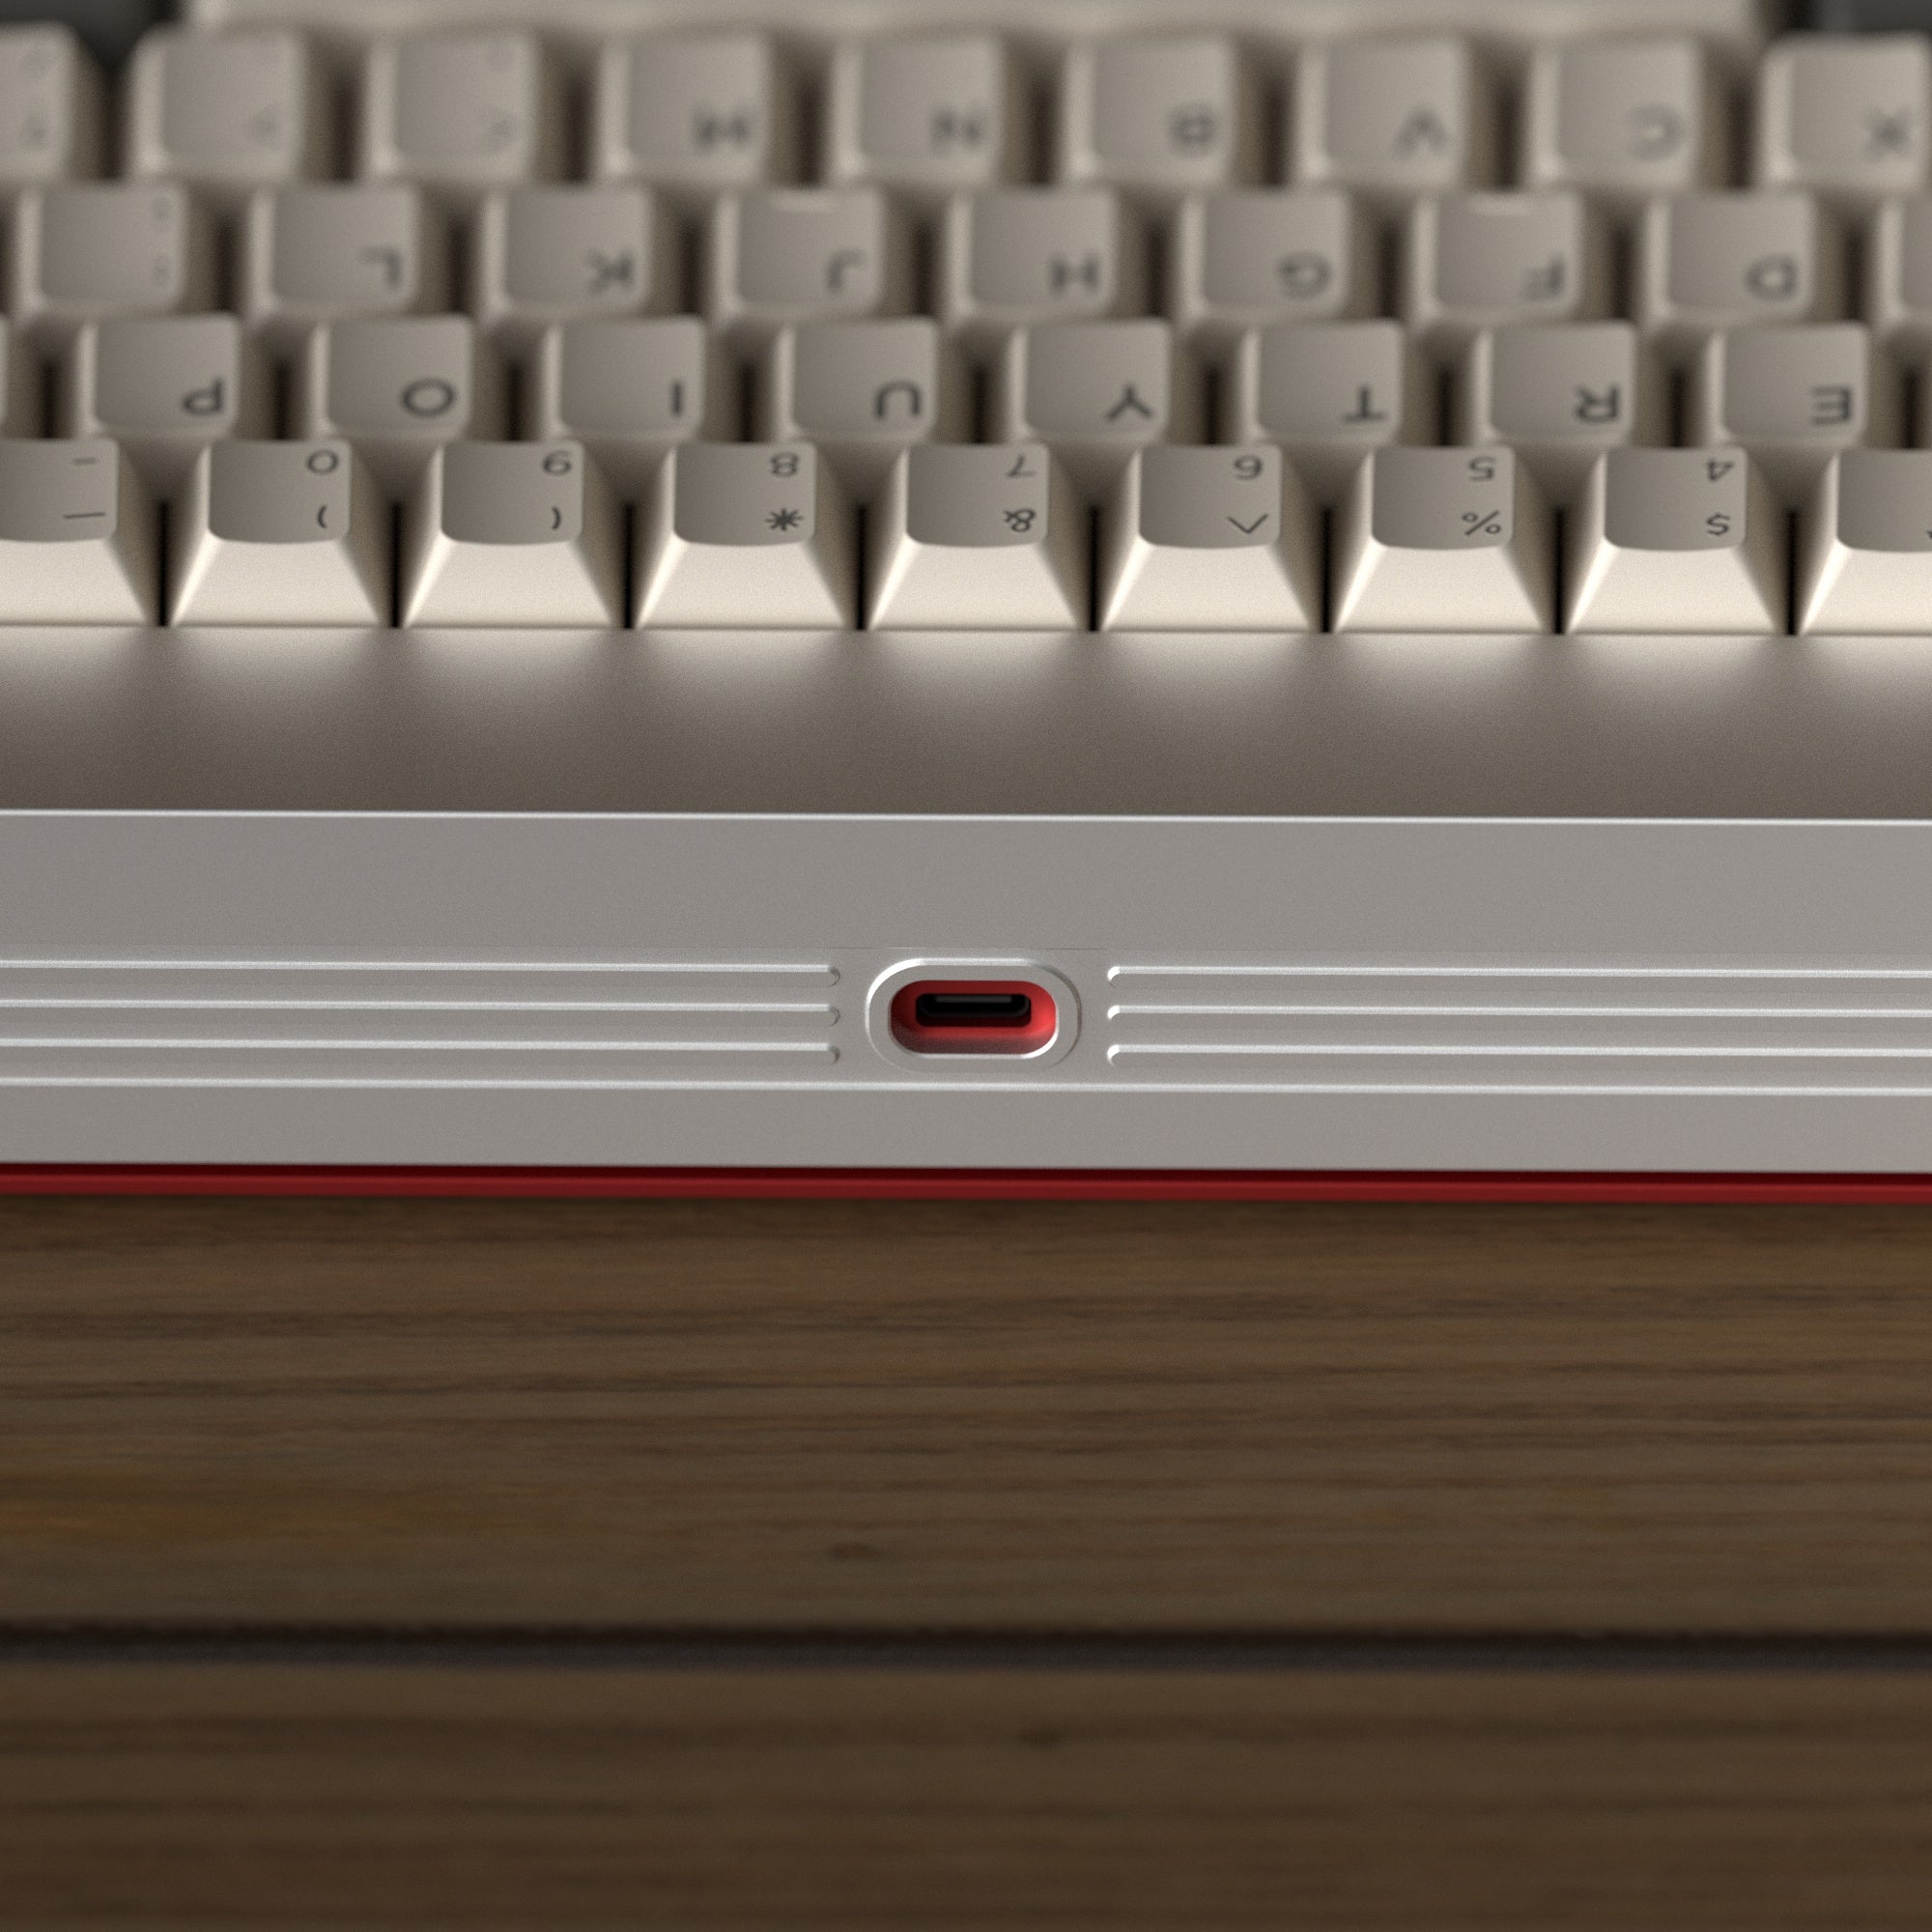 MM-Class60 Retro Keyboard Kit